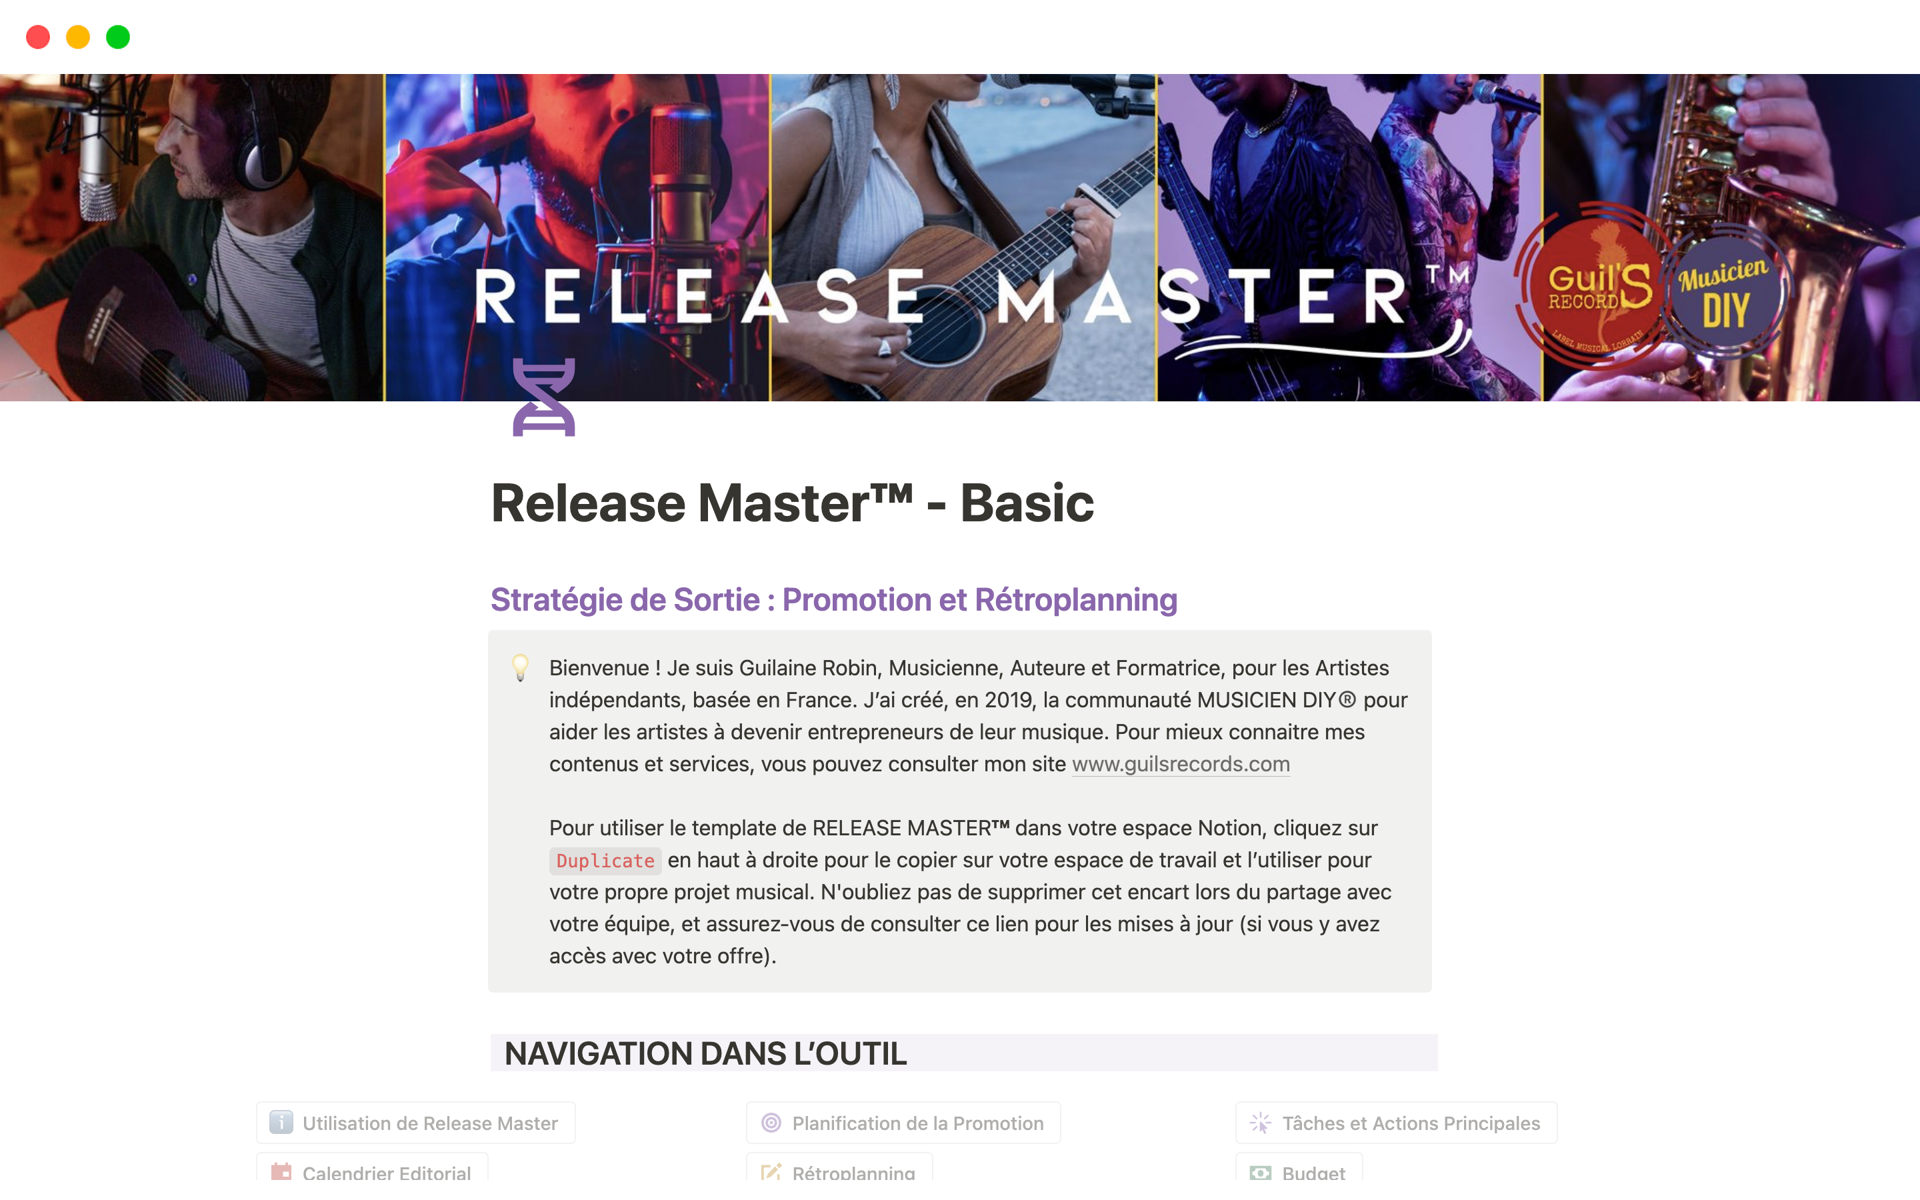 Aperçu du modèle de Release Master™ - Basic